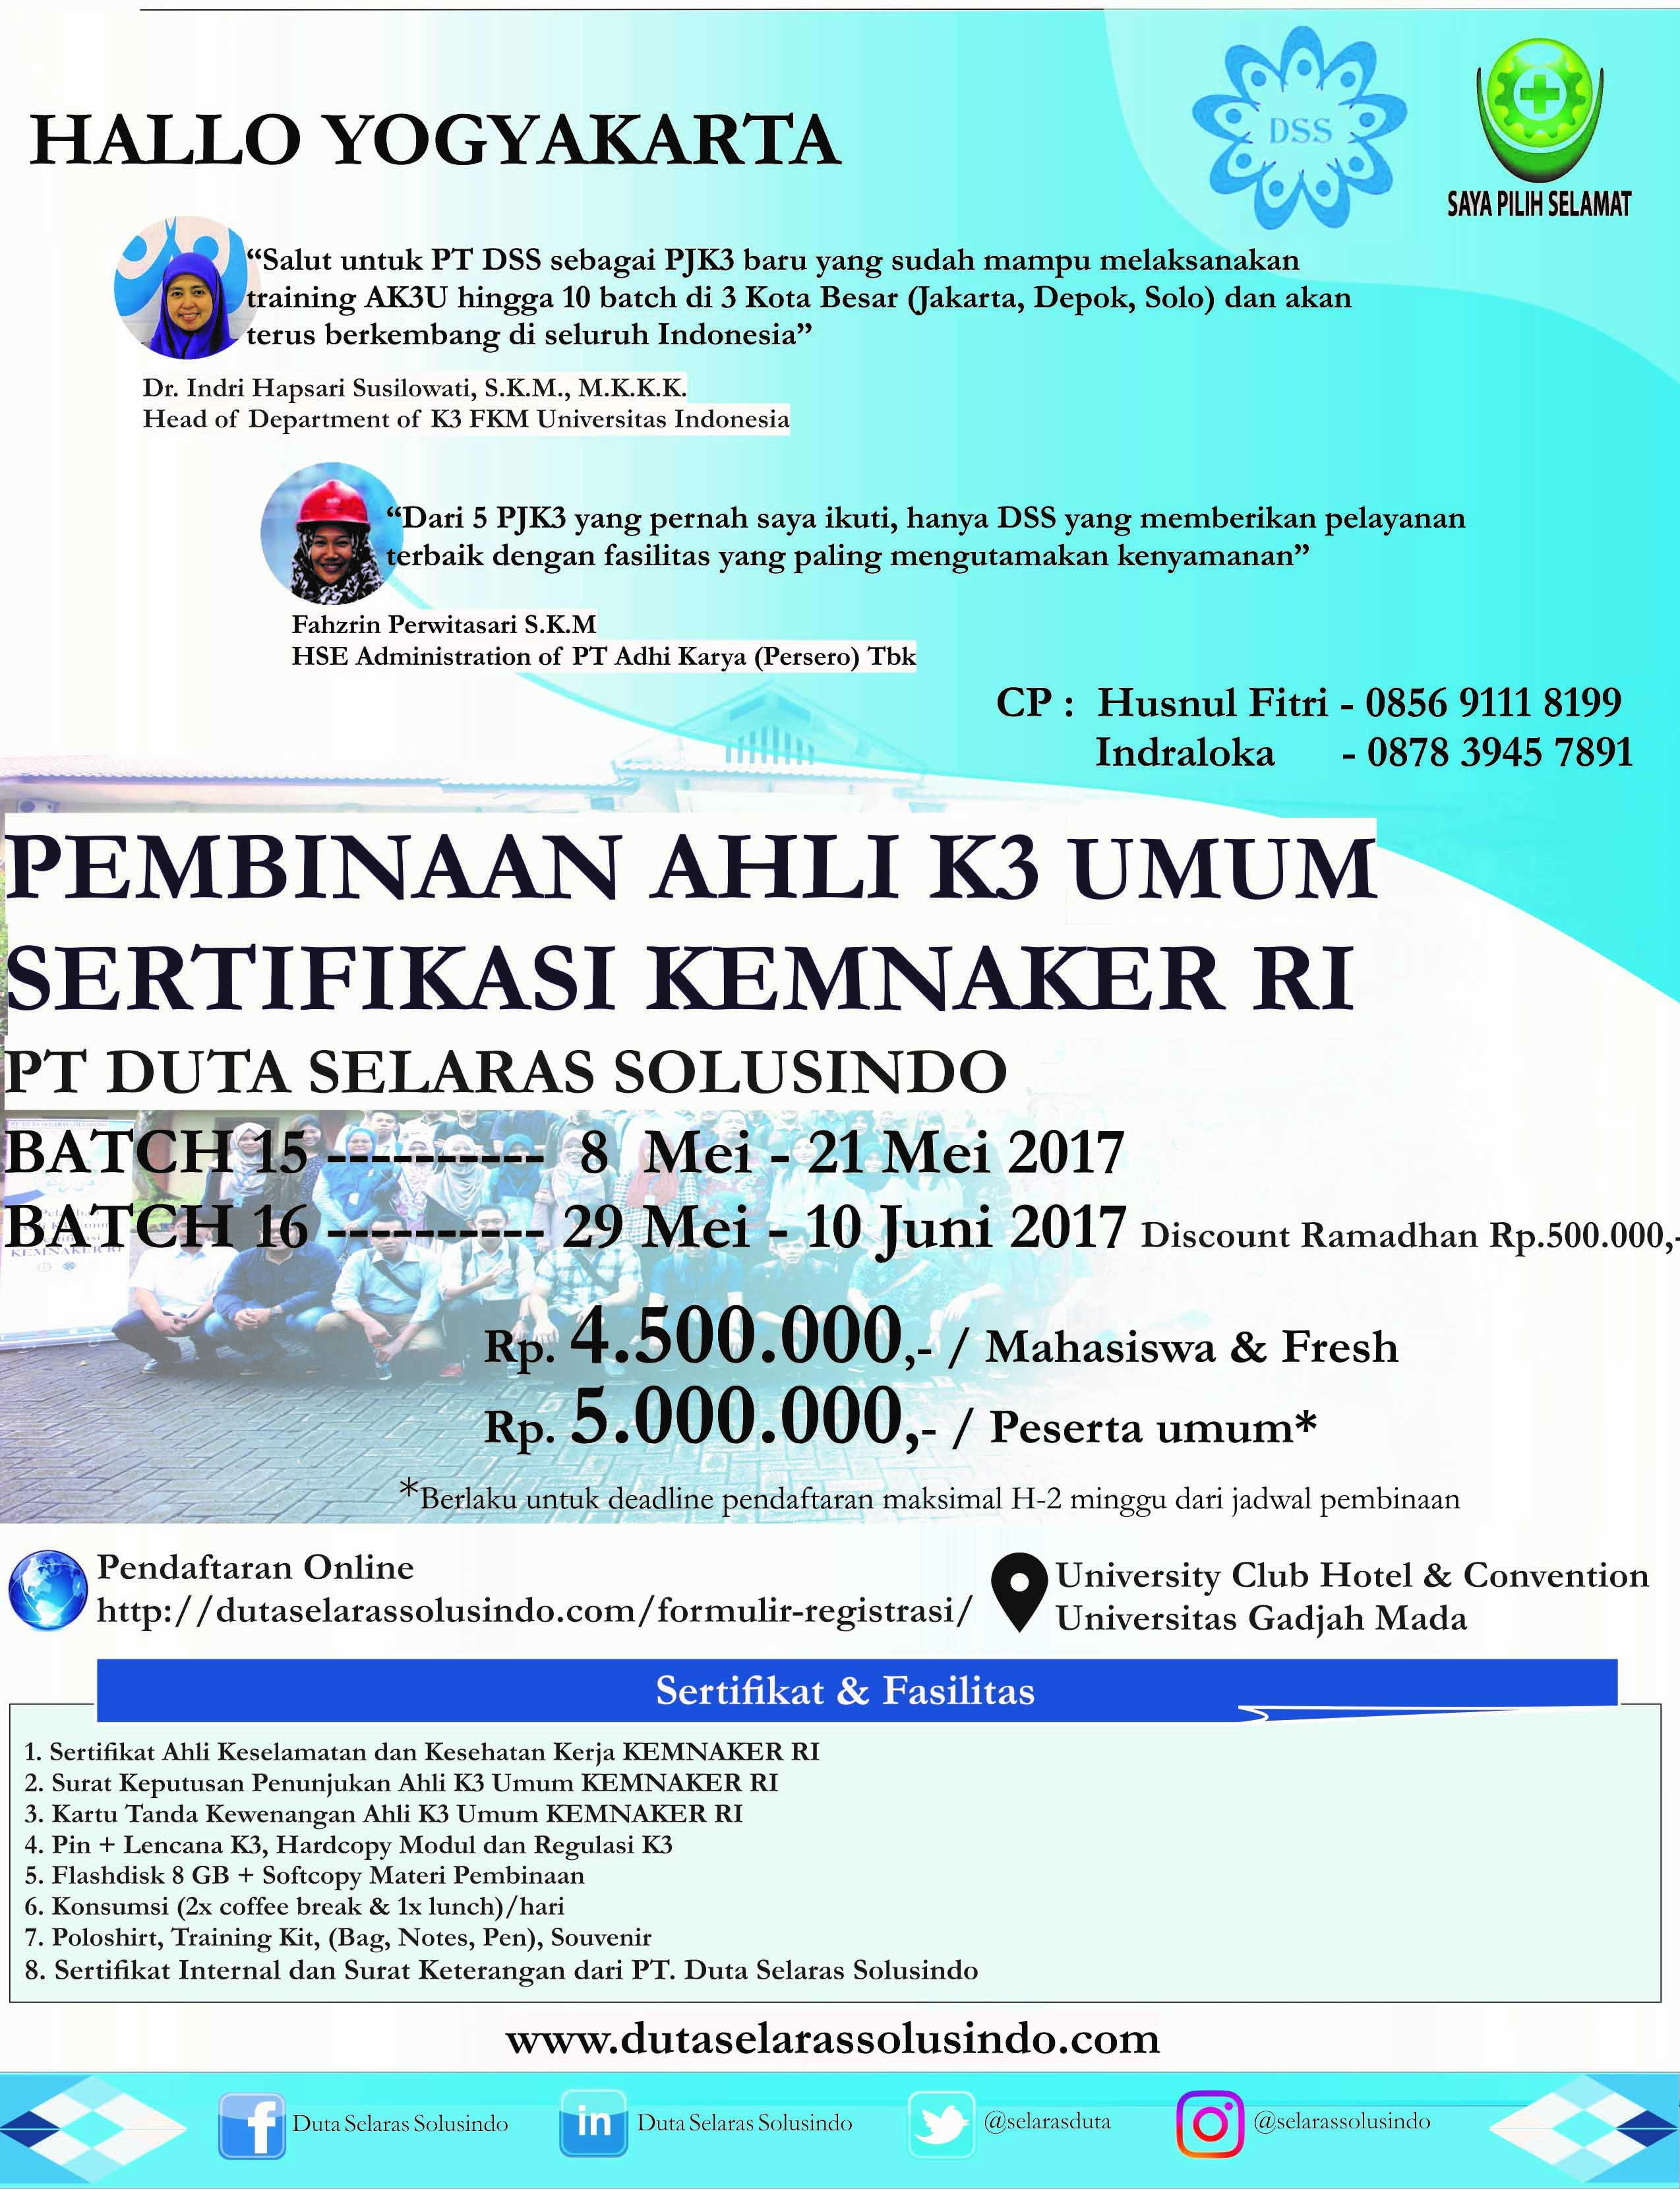 [POSTER] Pembinaan Ahli K3 Umum Sertifikasi KEMNAKER RI 2017 Regional Yogyakarta - PT. Duta Selaras Solusindo